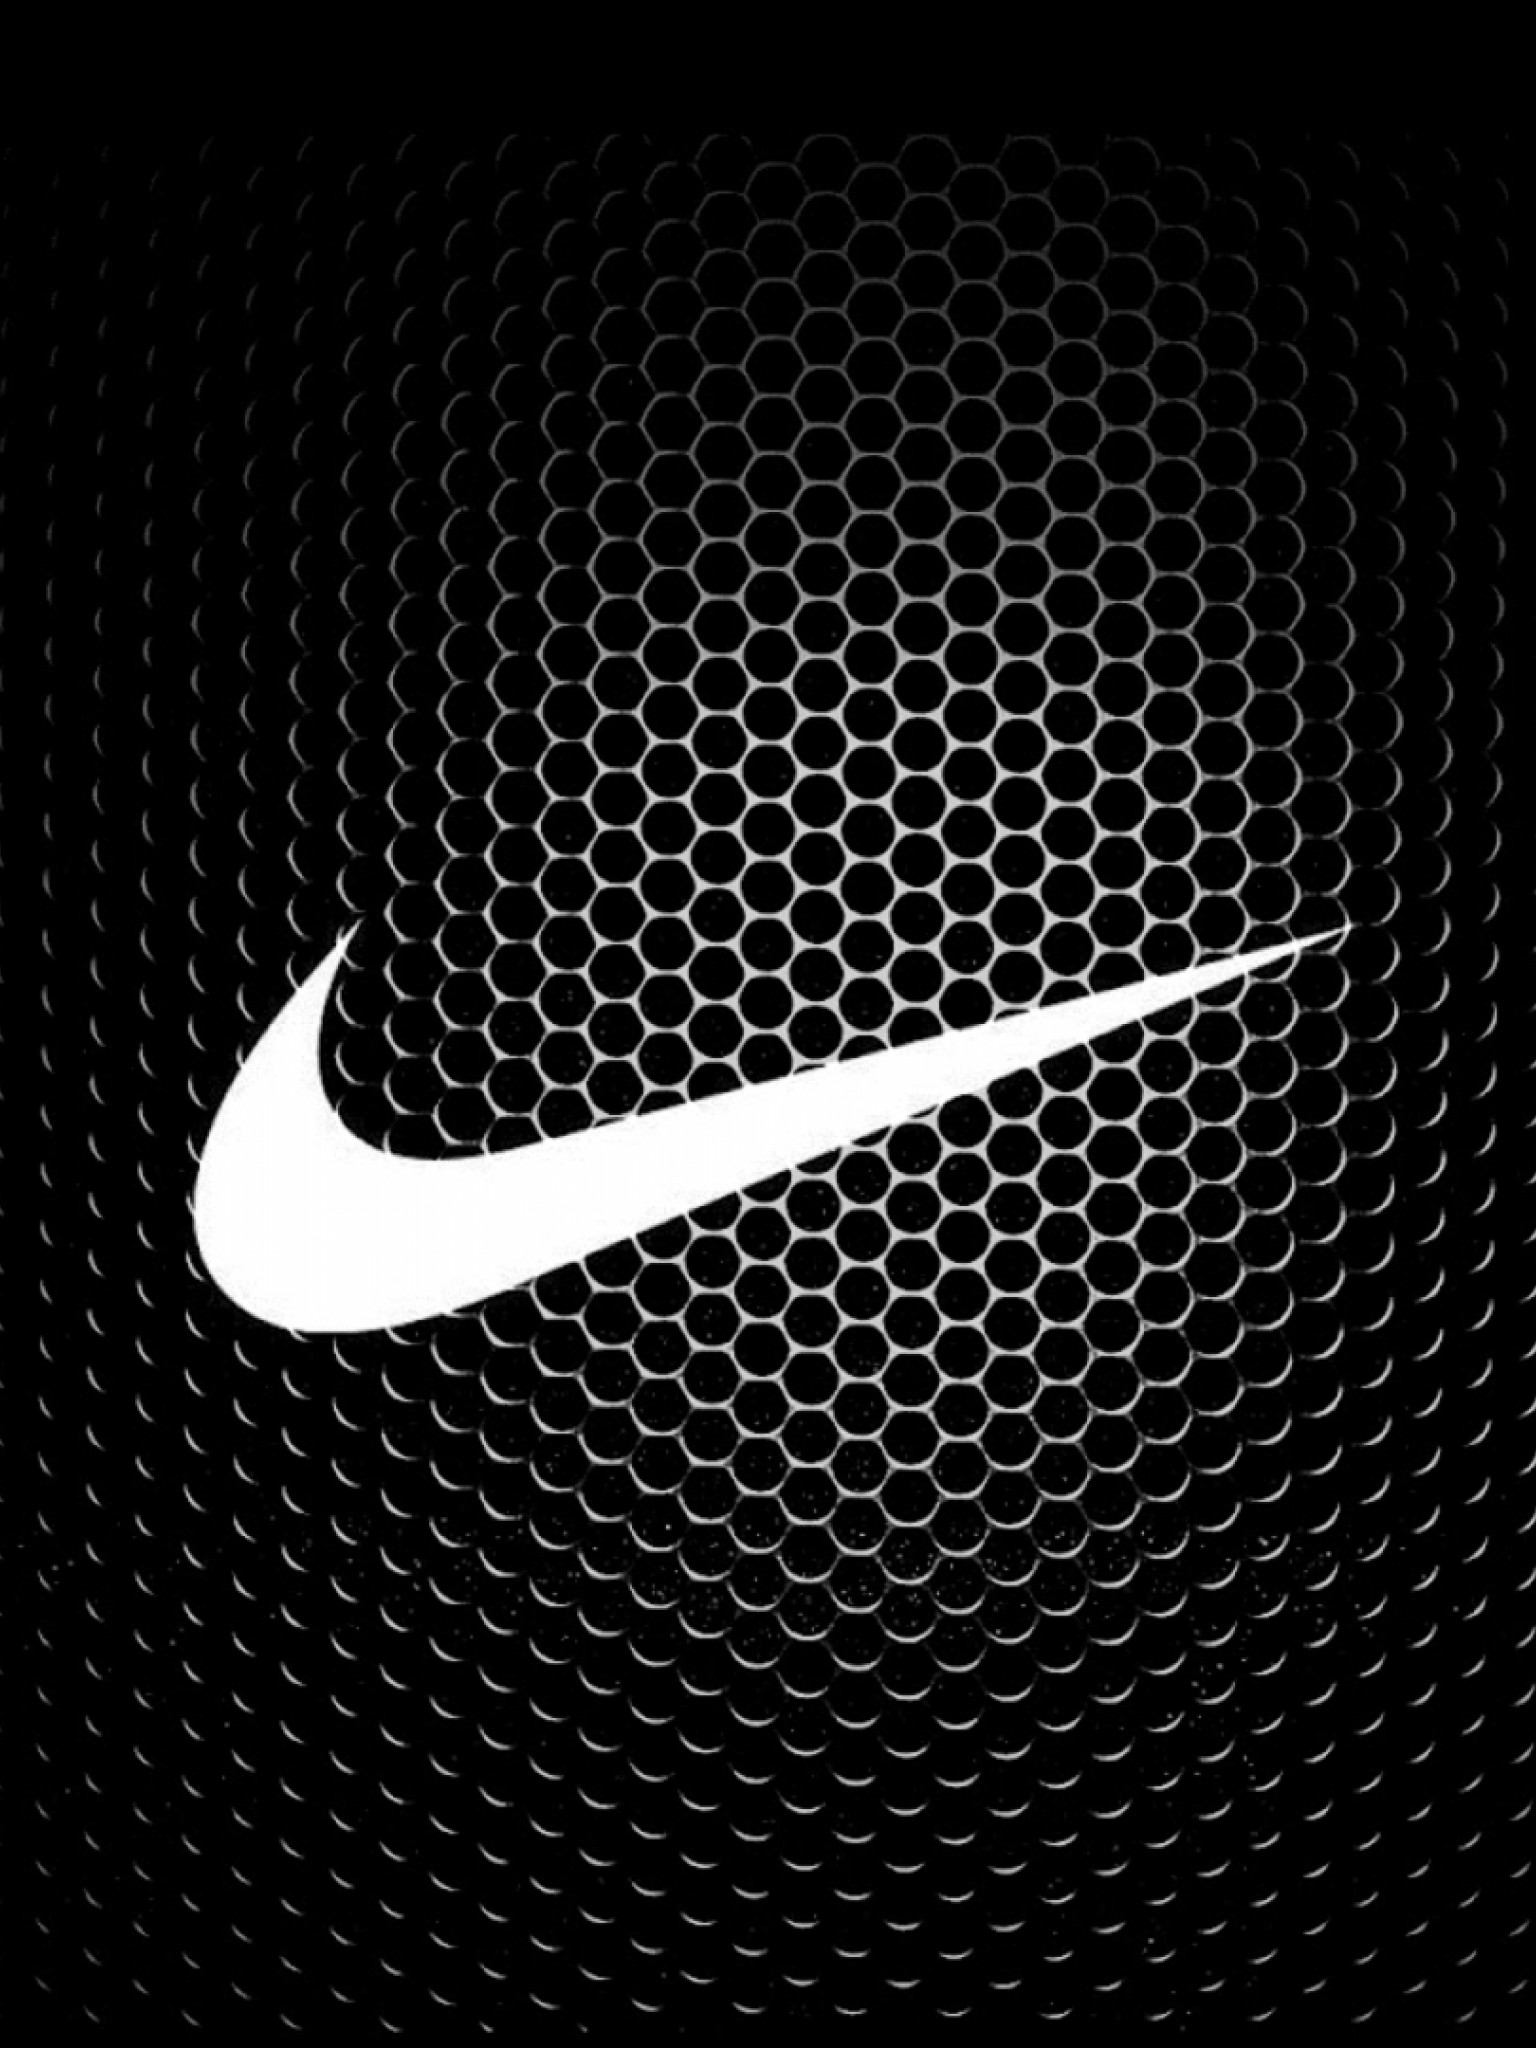 Nike Ipad Wallpapers